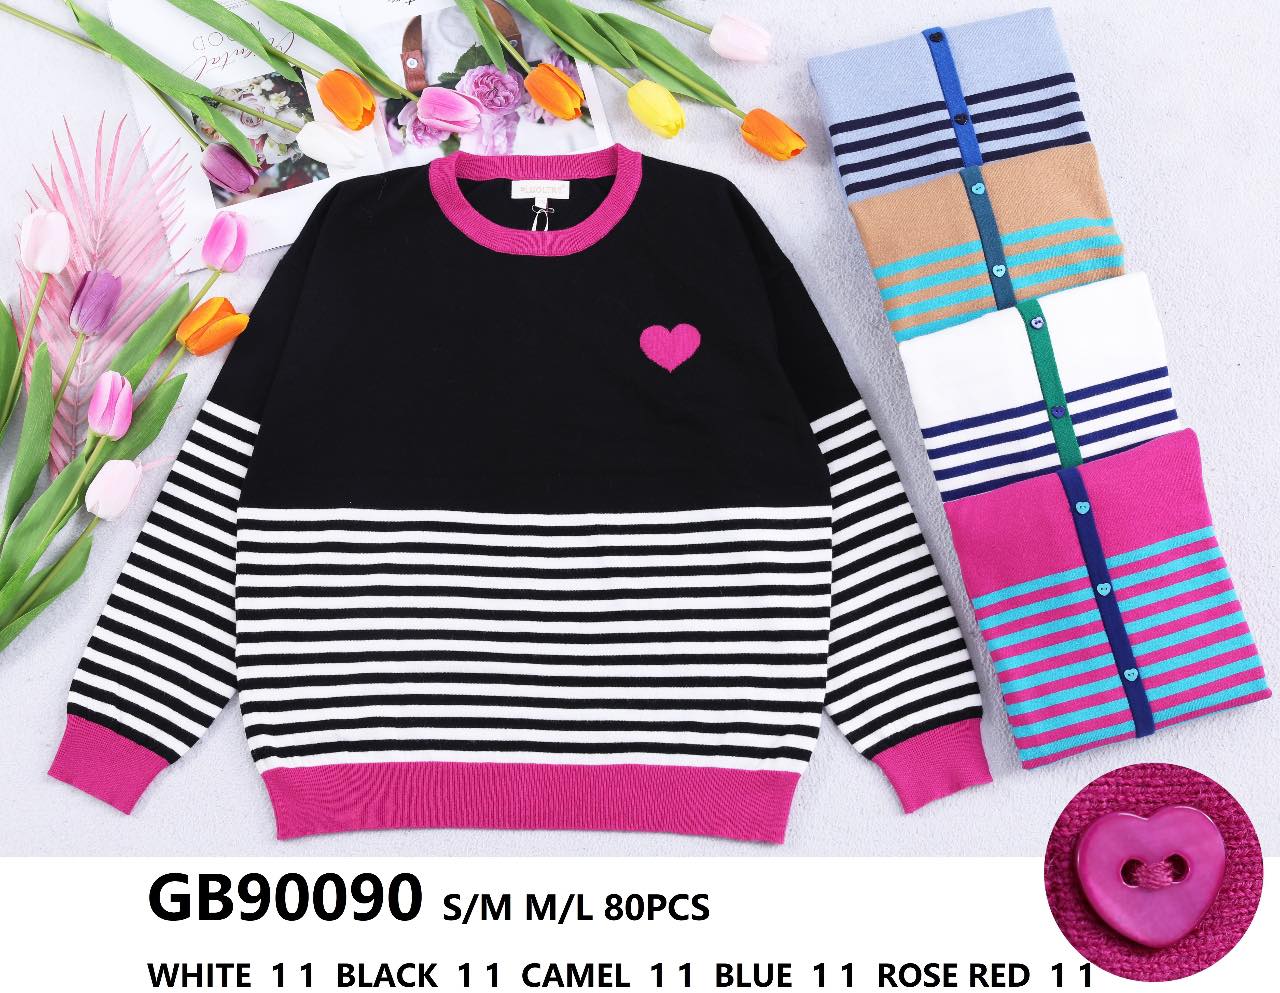 Swetry damska (Francja produkt) Roz S/M.M/L  Mix kolor, Paszka 10 szt